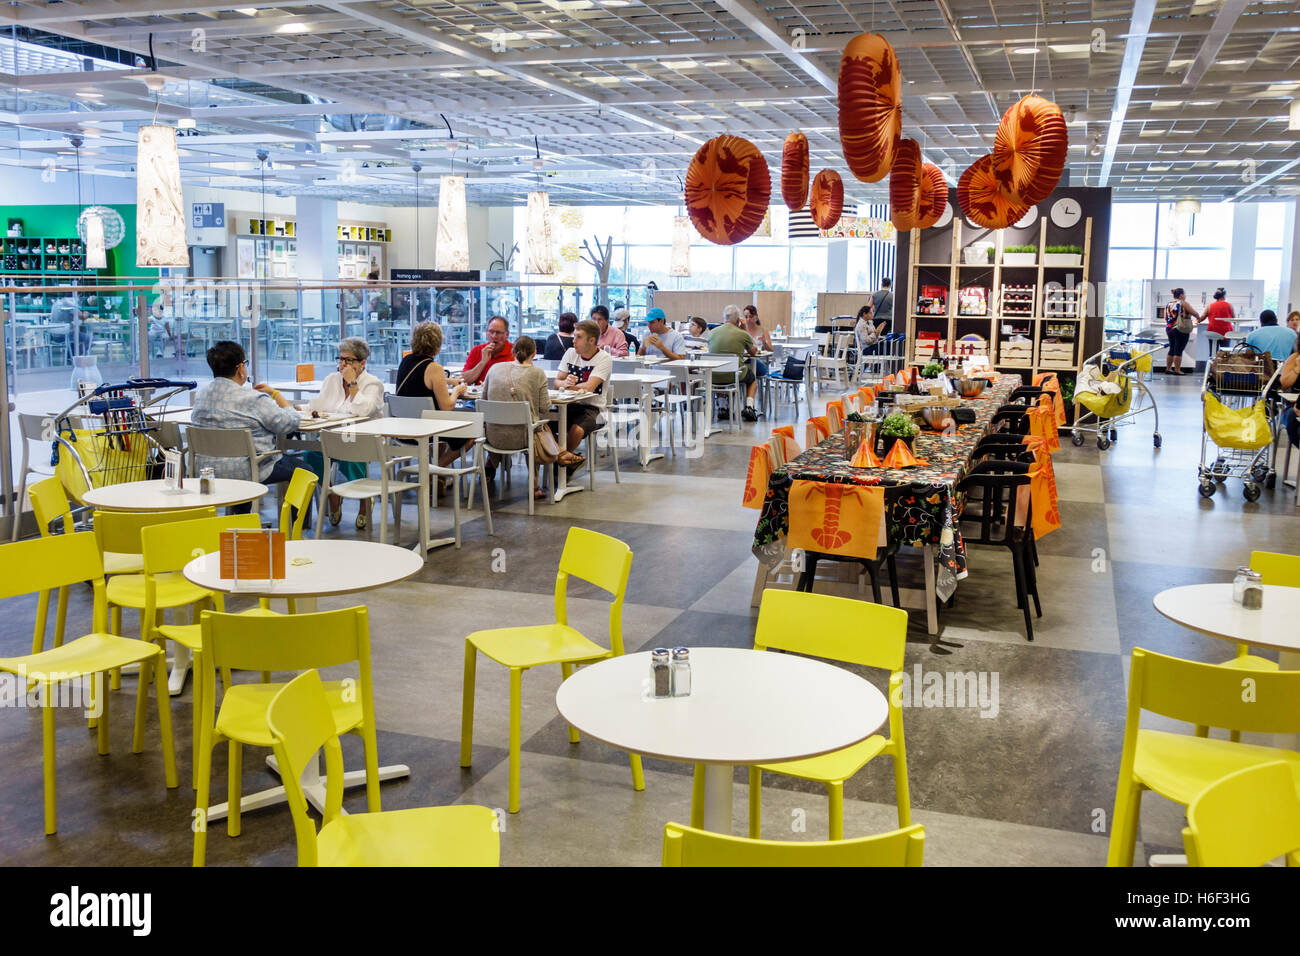 Miami Florida Ikea Mobel Innen Cafeteria Restaurant Tisch Stuhle